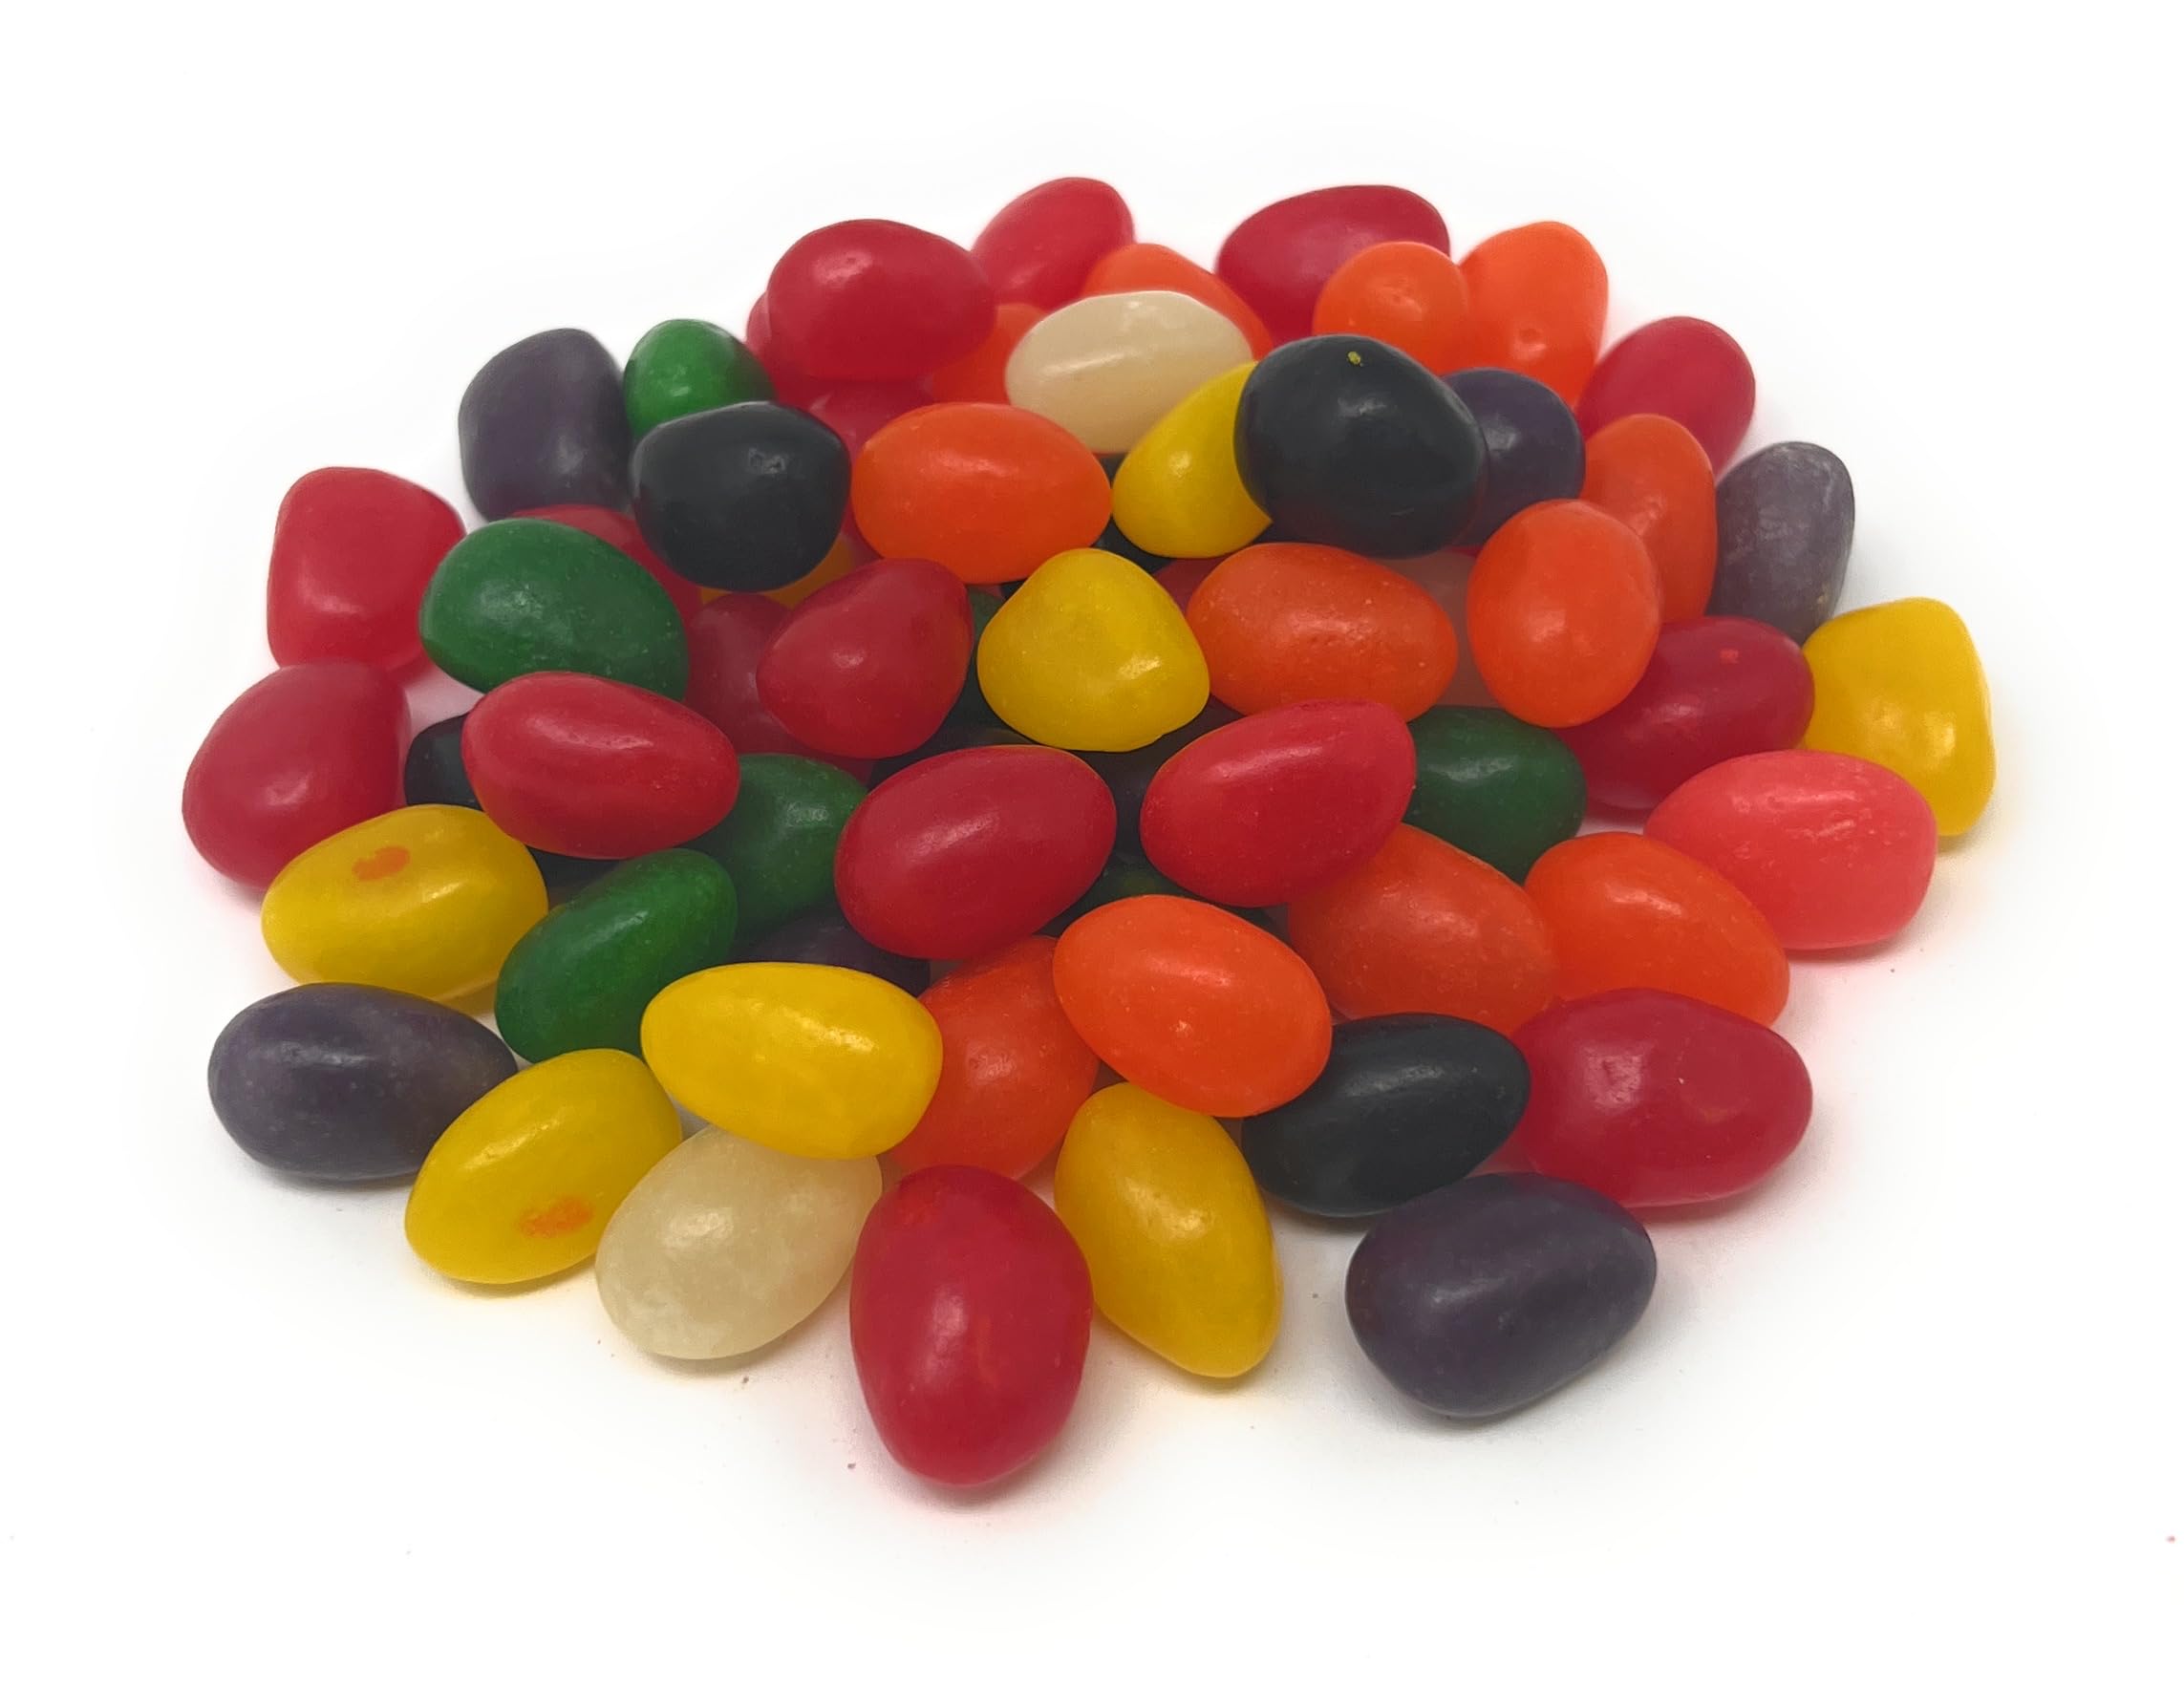 Assorted Flavor Jelly ZS23 Beans, 3 Pound Bulk Bag - Walmart.com